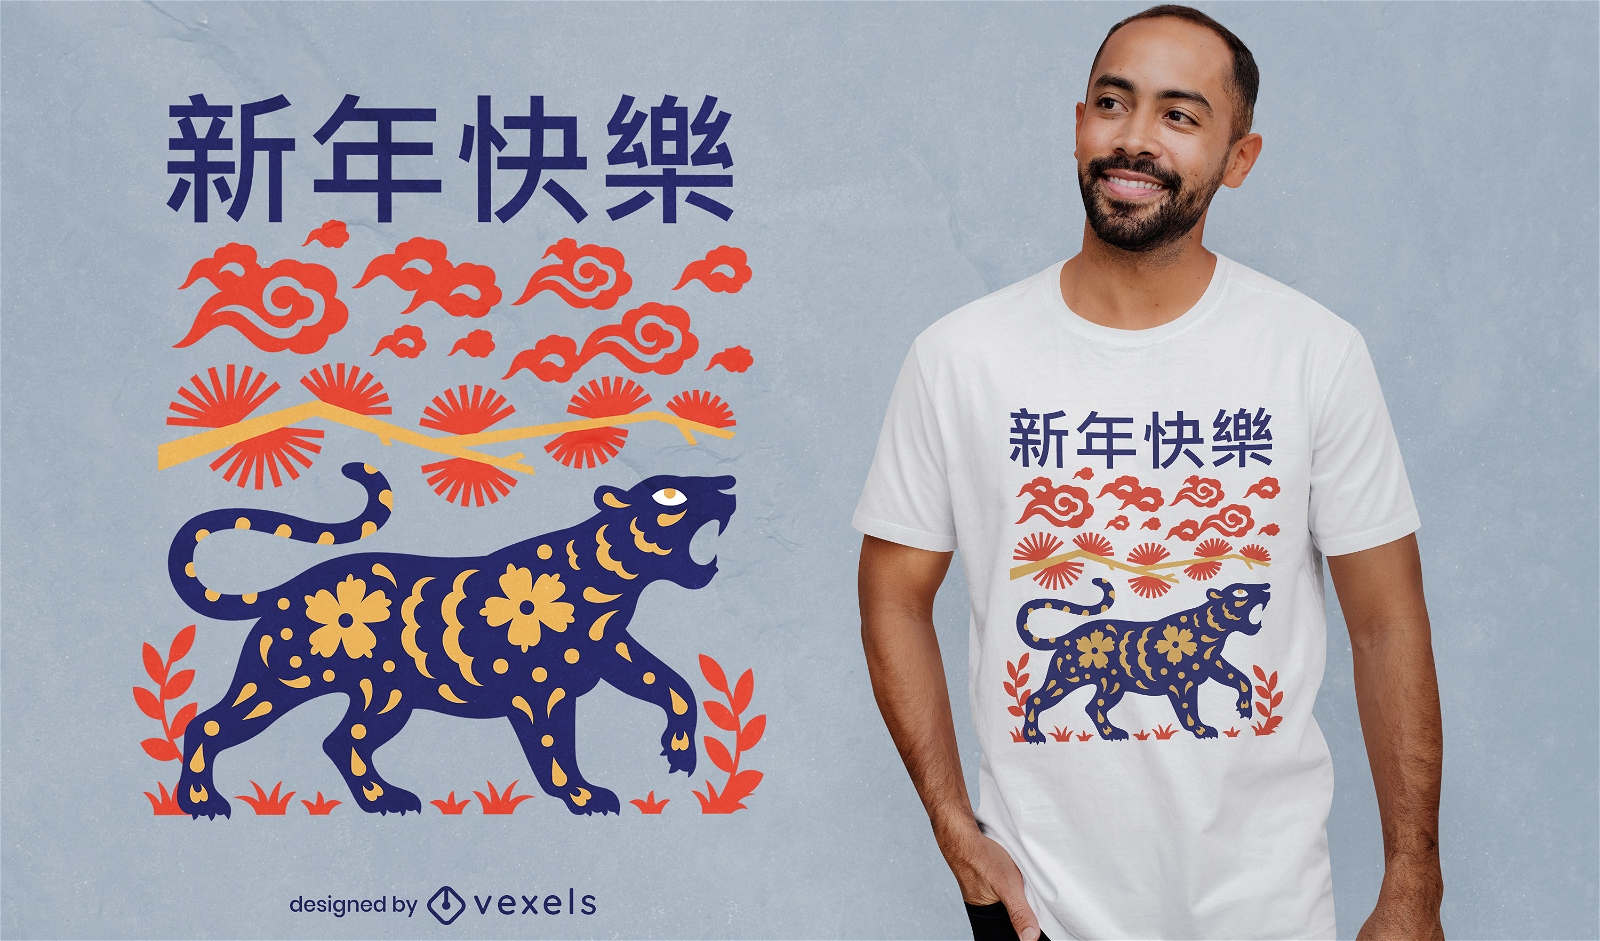 Chinese tiger phrase t-shirt design